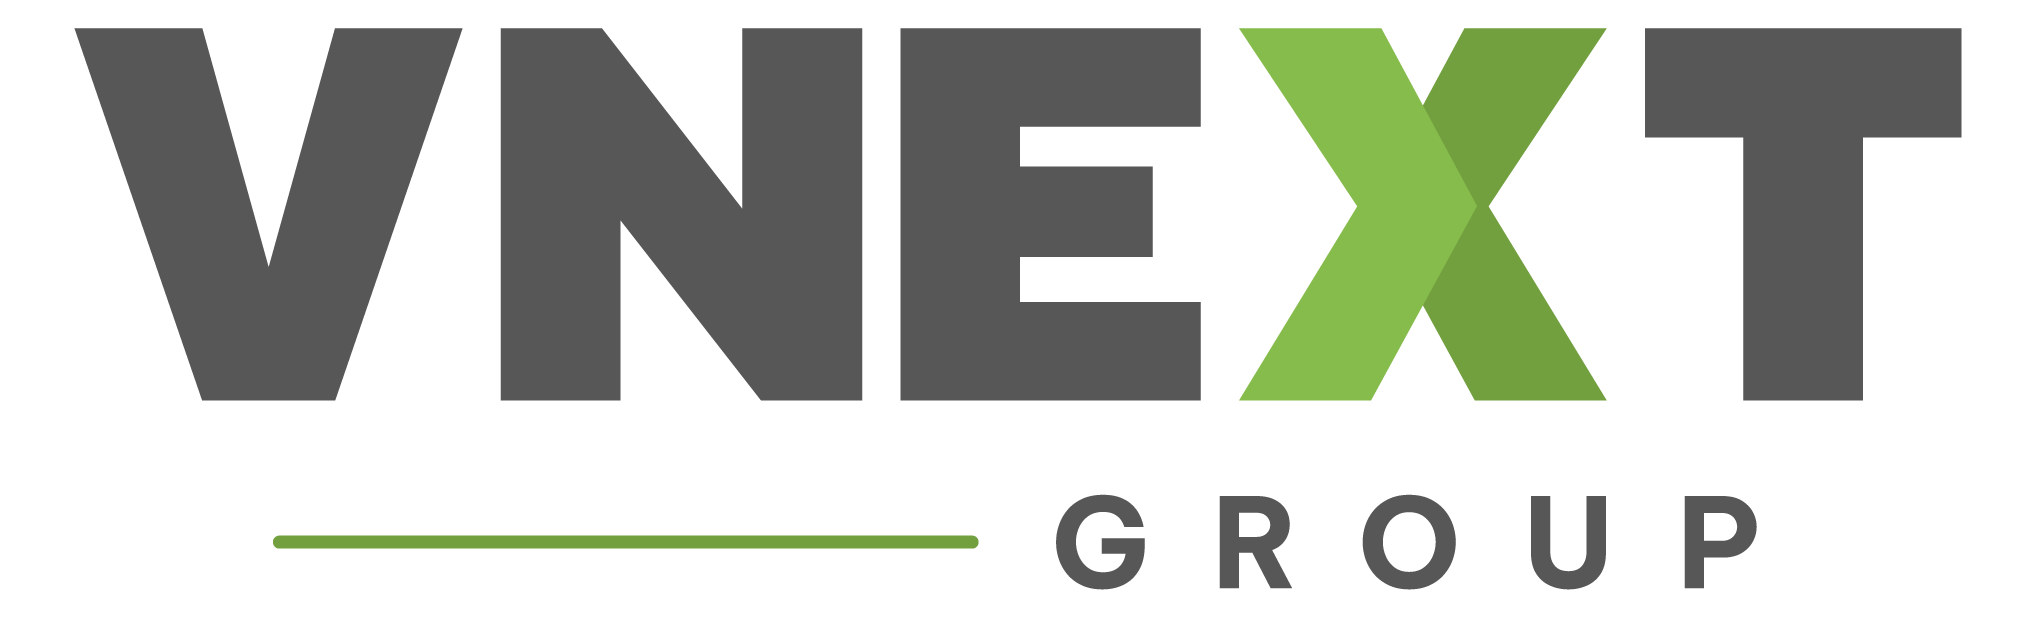 VNEXT logo